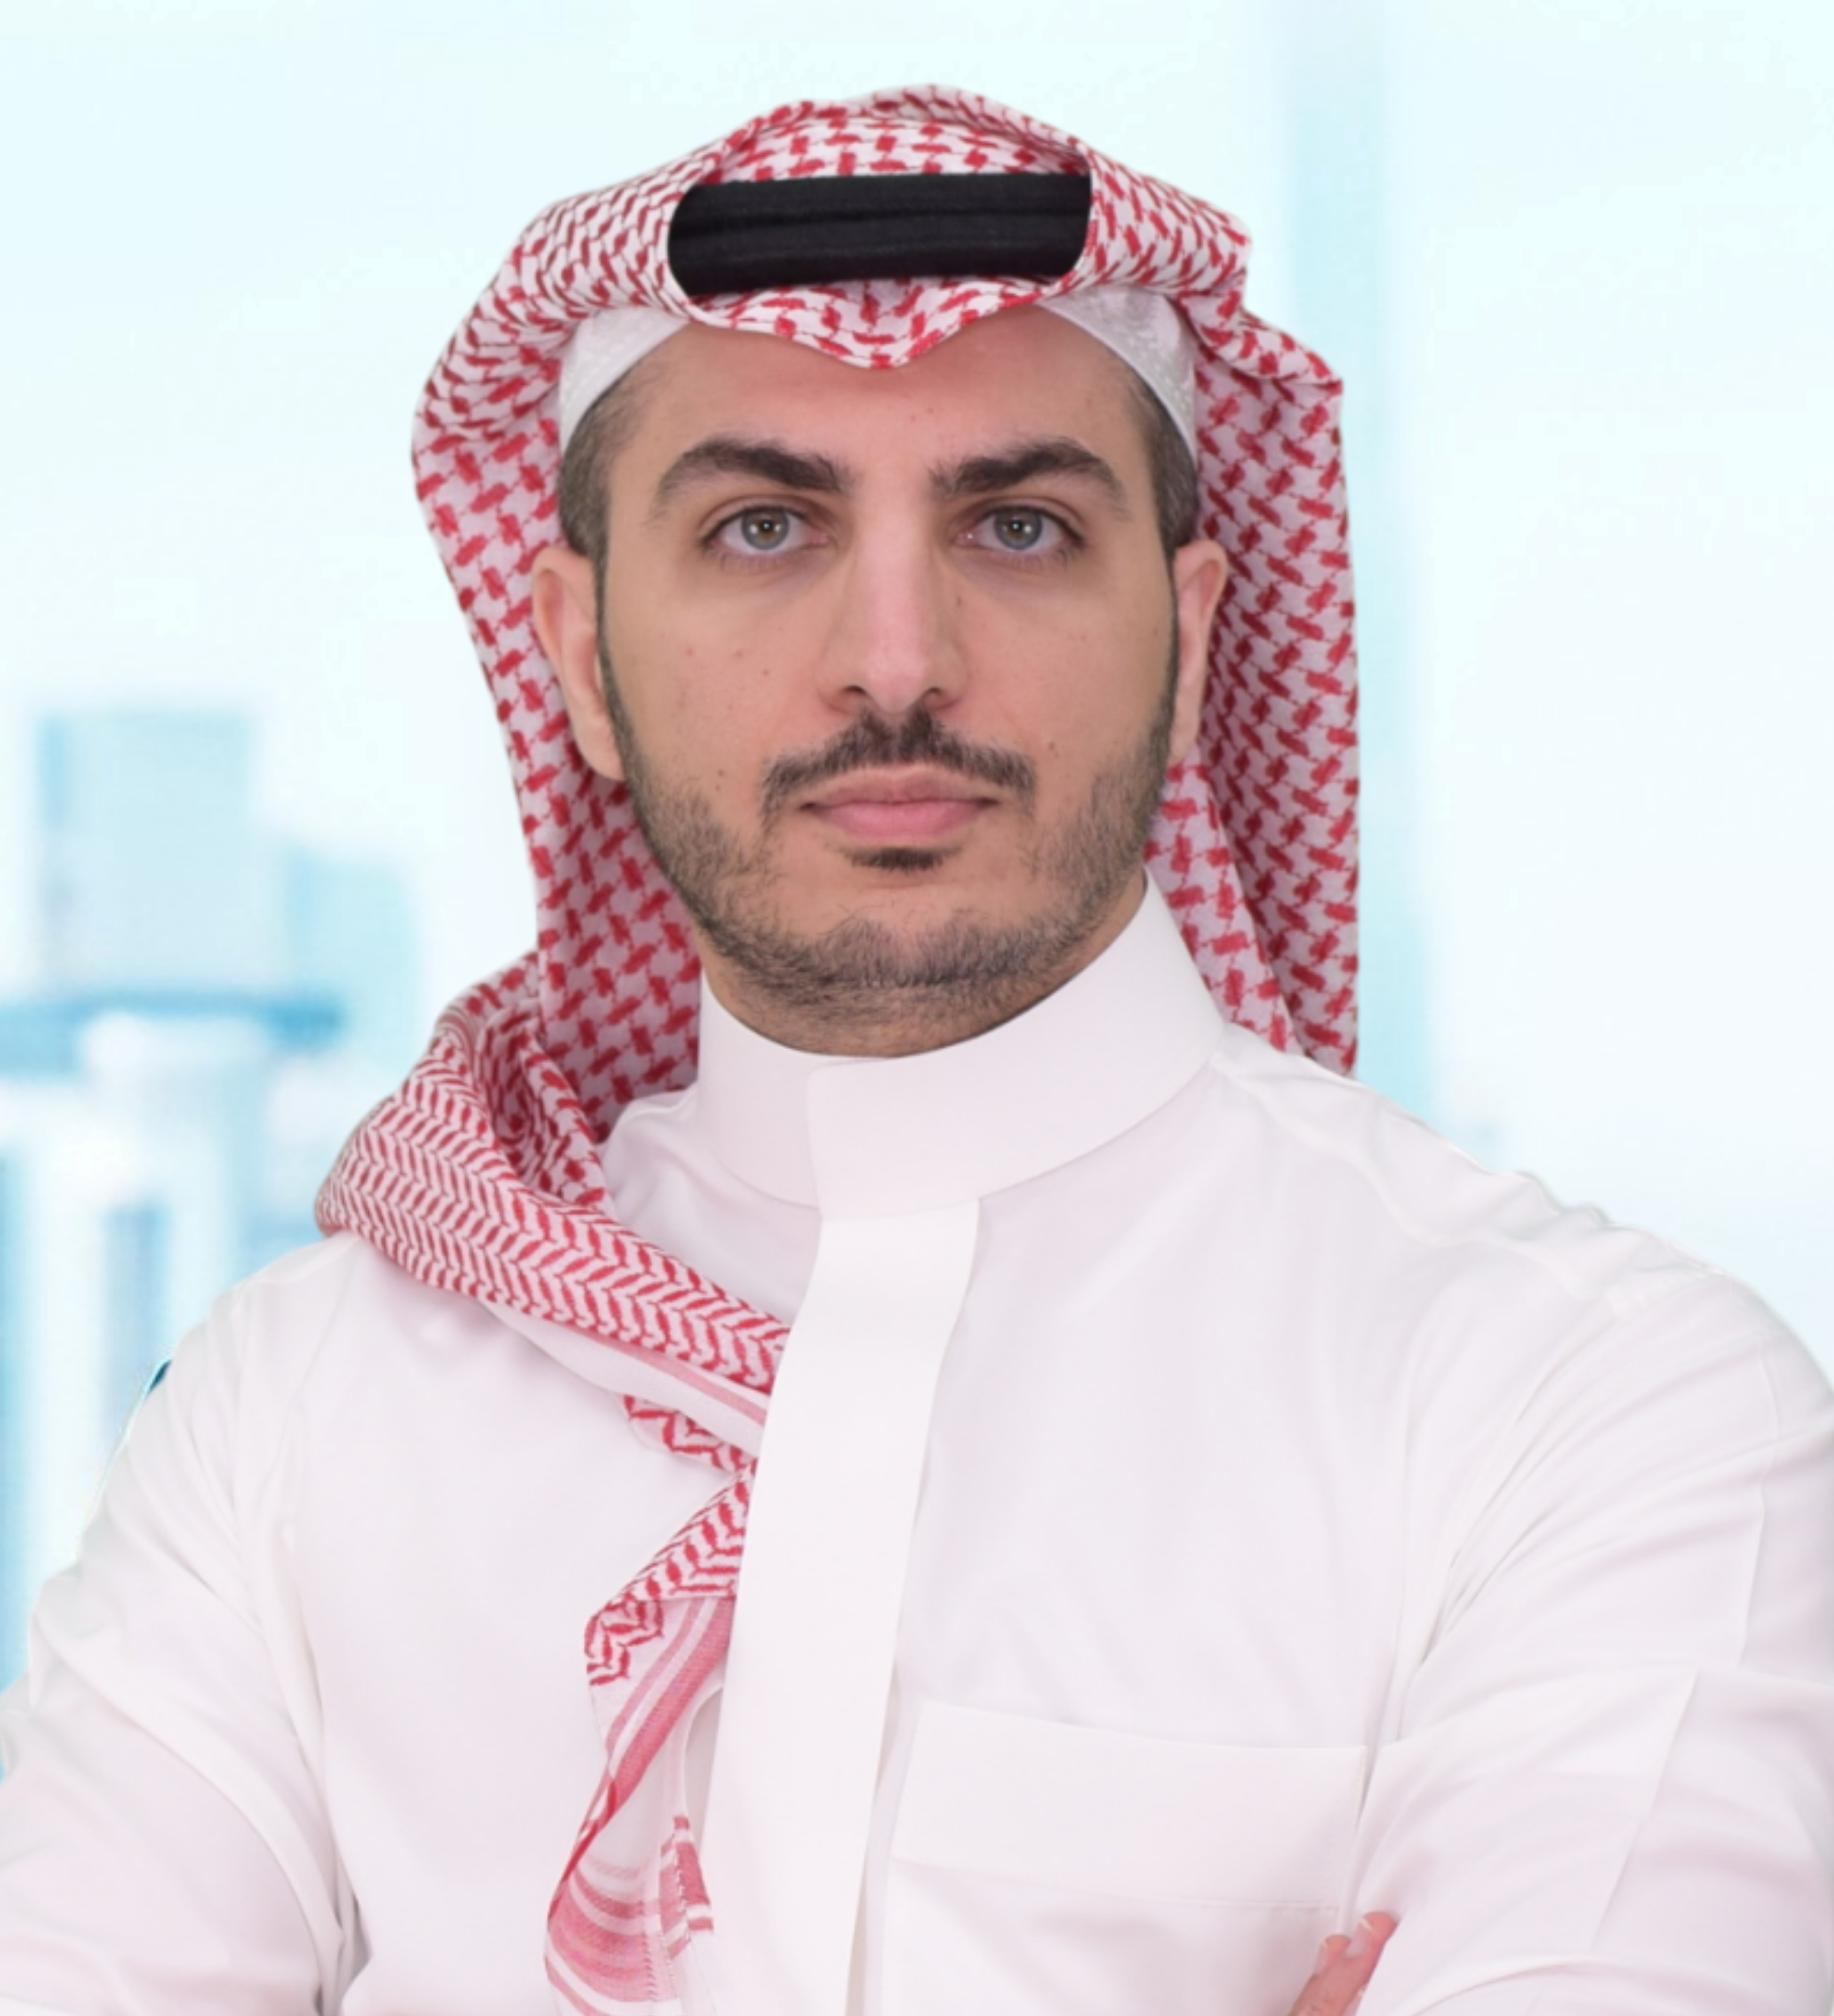 Mr. Muteb bin Mohammed Al Shathri